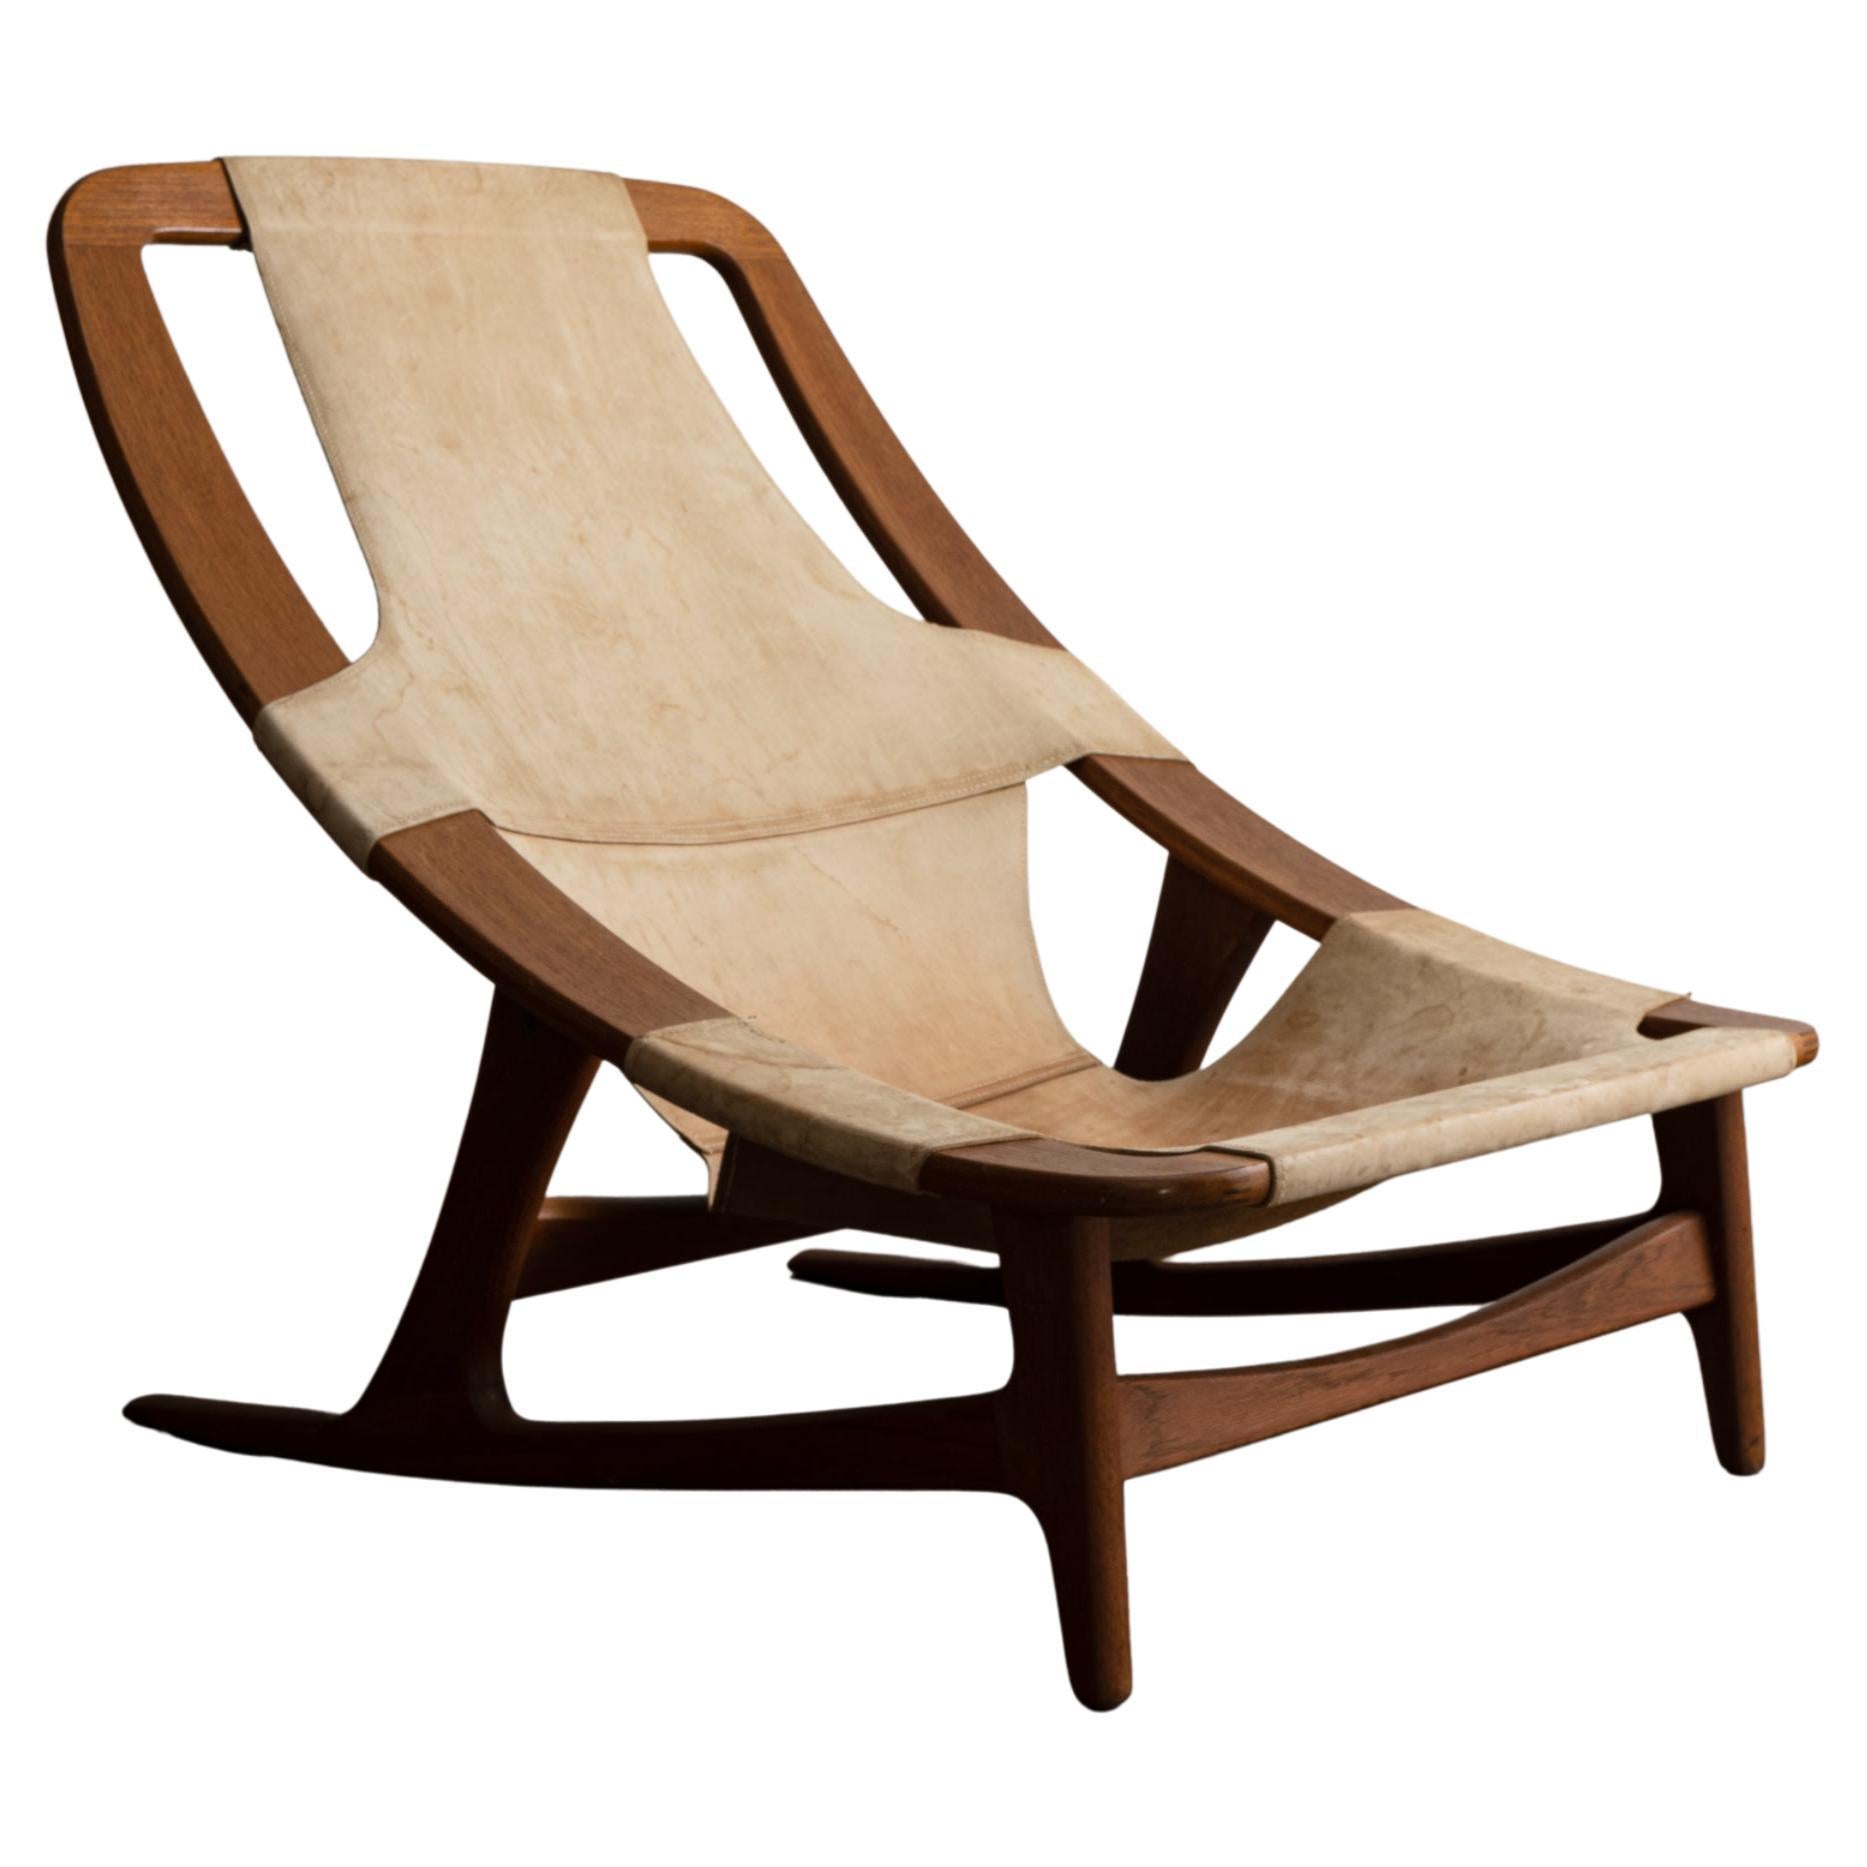 "Holmekollen" Lounge Chair by Arne Tidemand Ruud for ISA